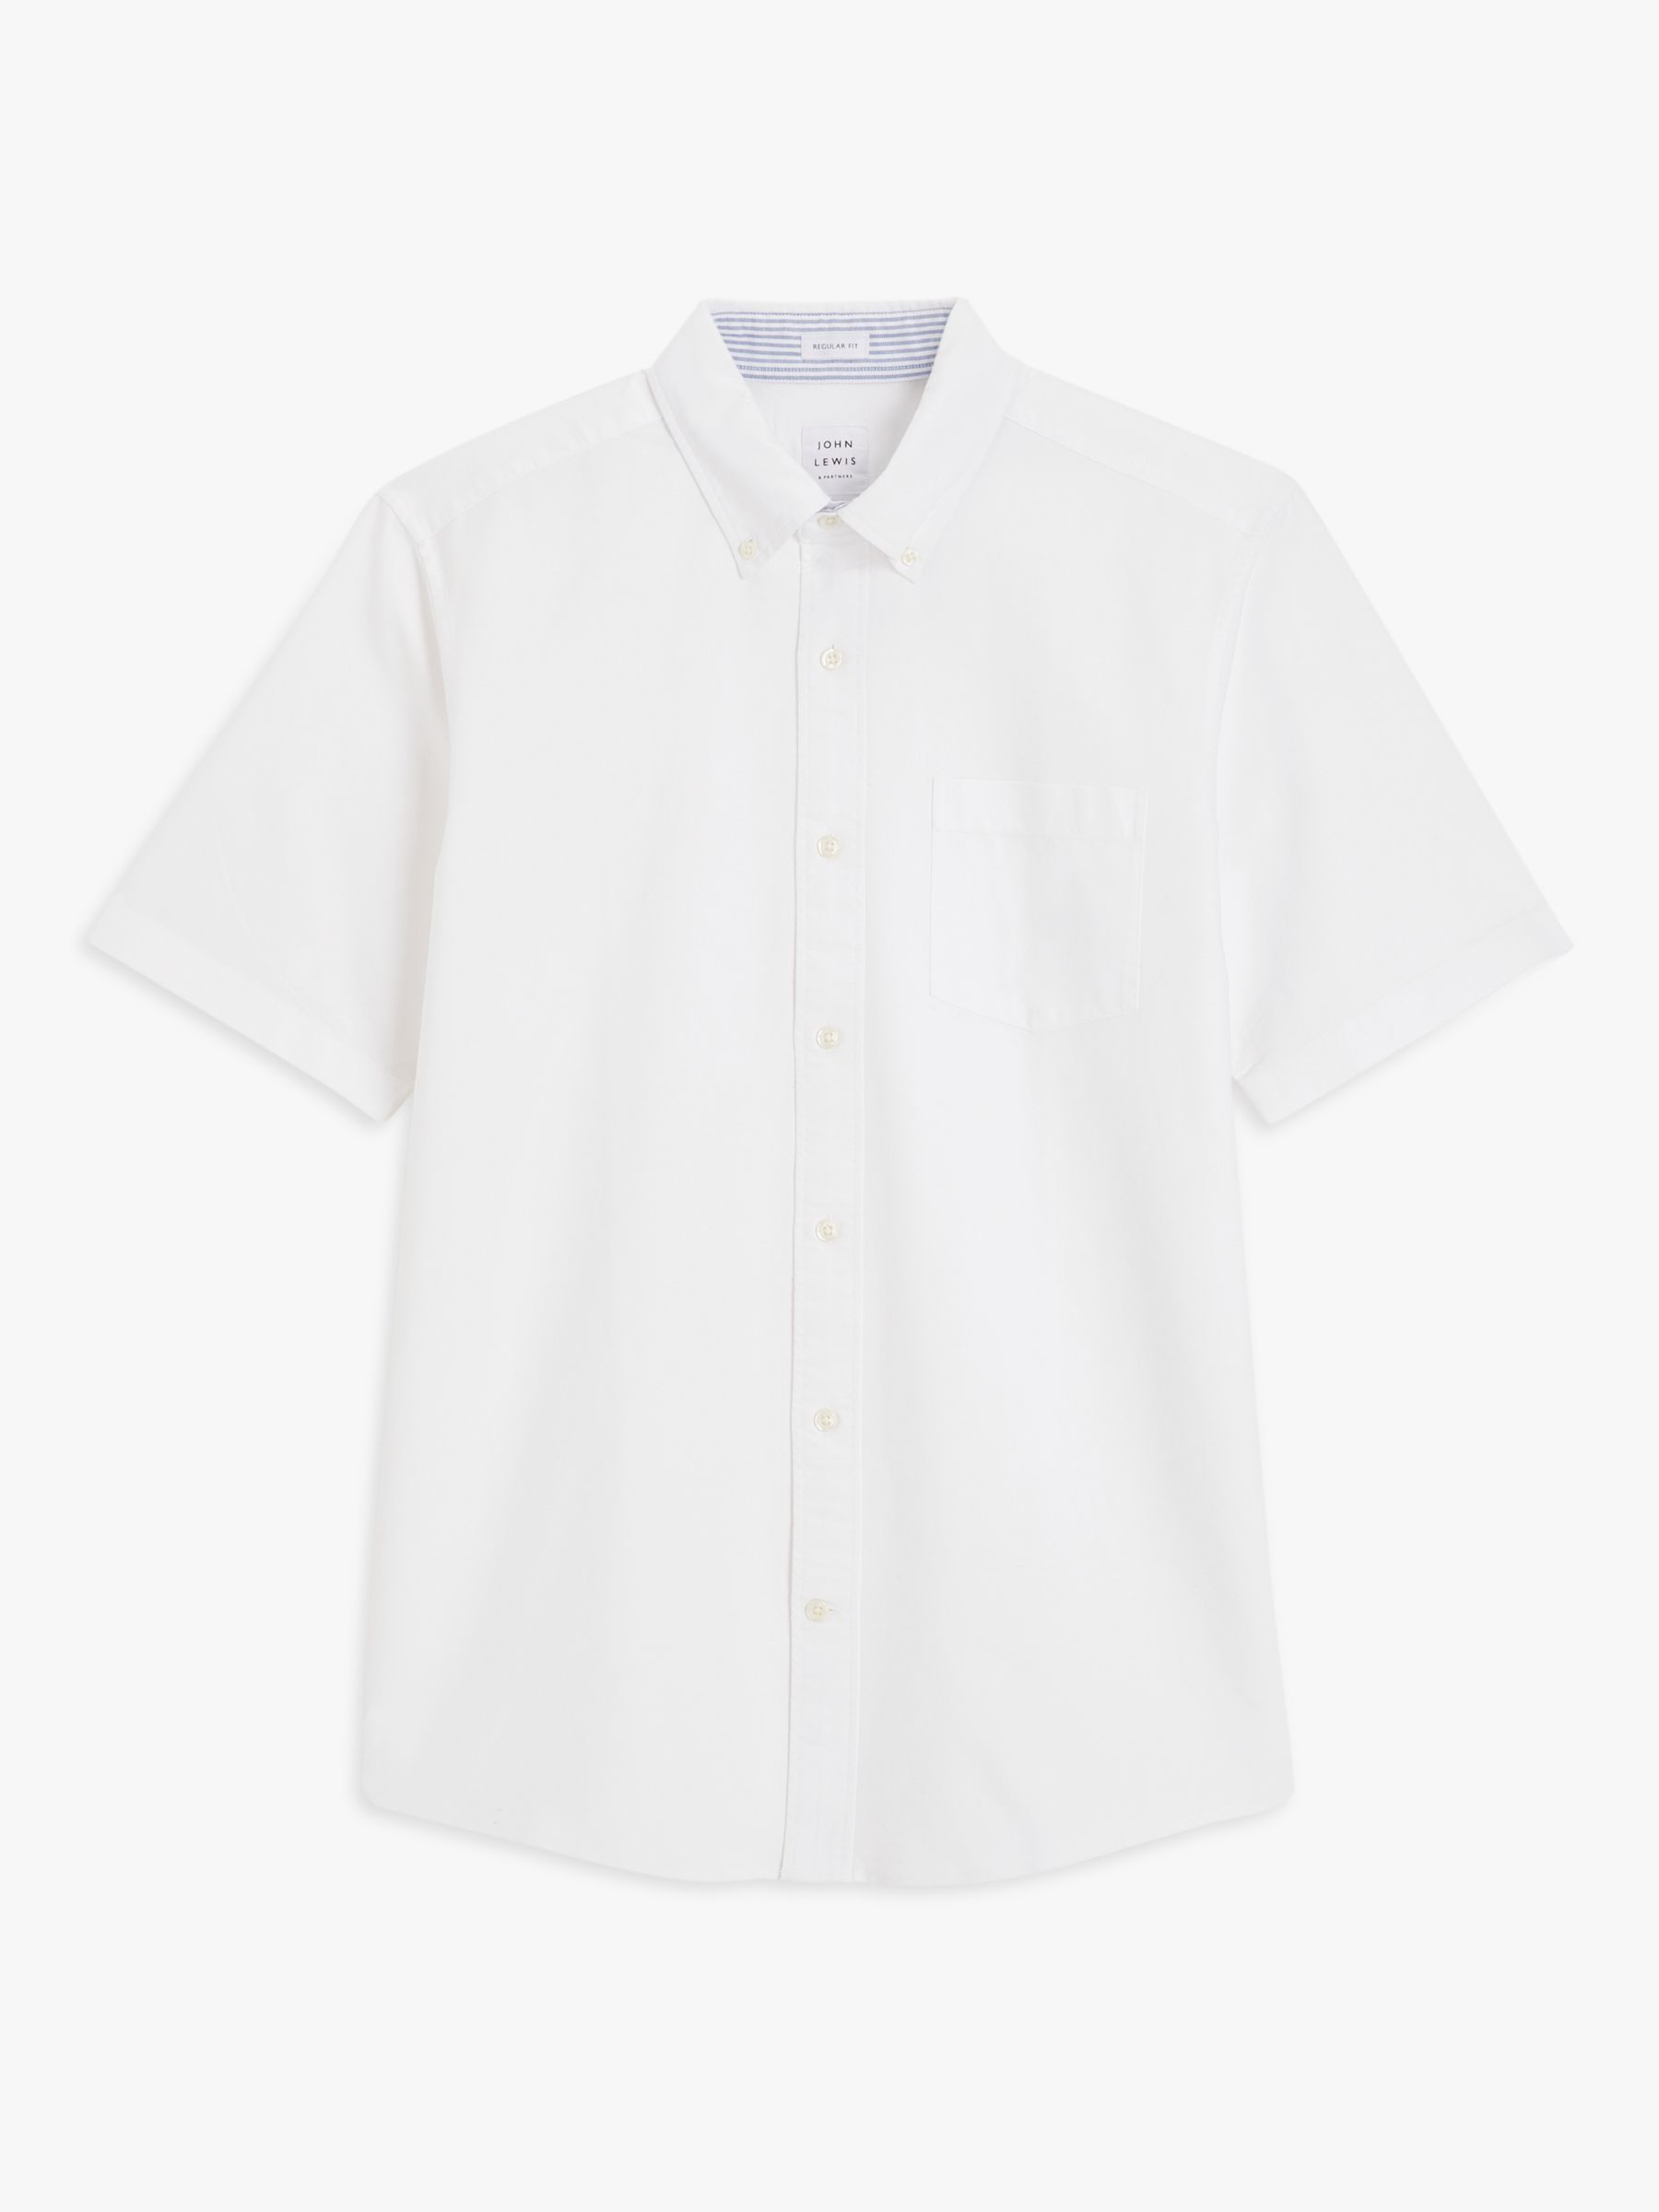 Buy John Lewis Regular Fit Short Sleeve Shirt Online at johnlewis.com